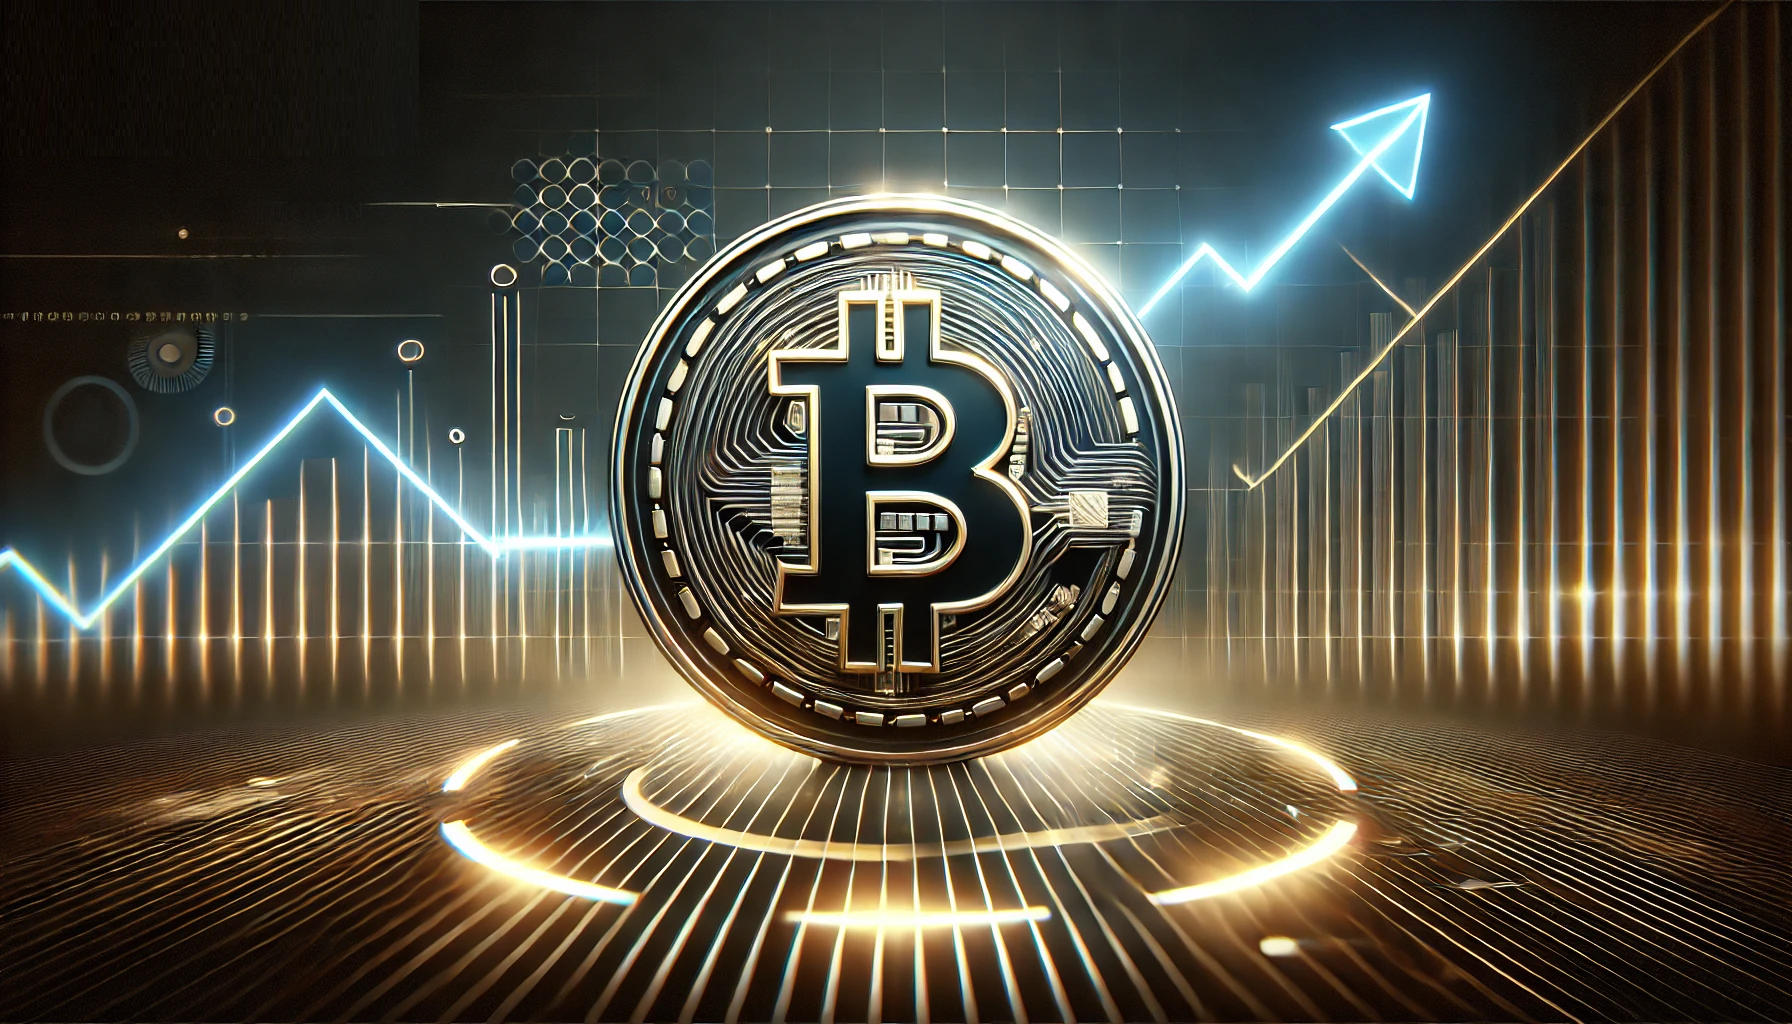 Bitcoin price buy signal